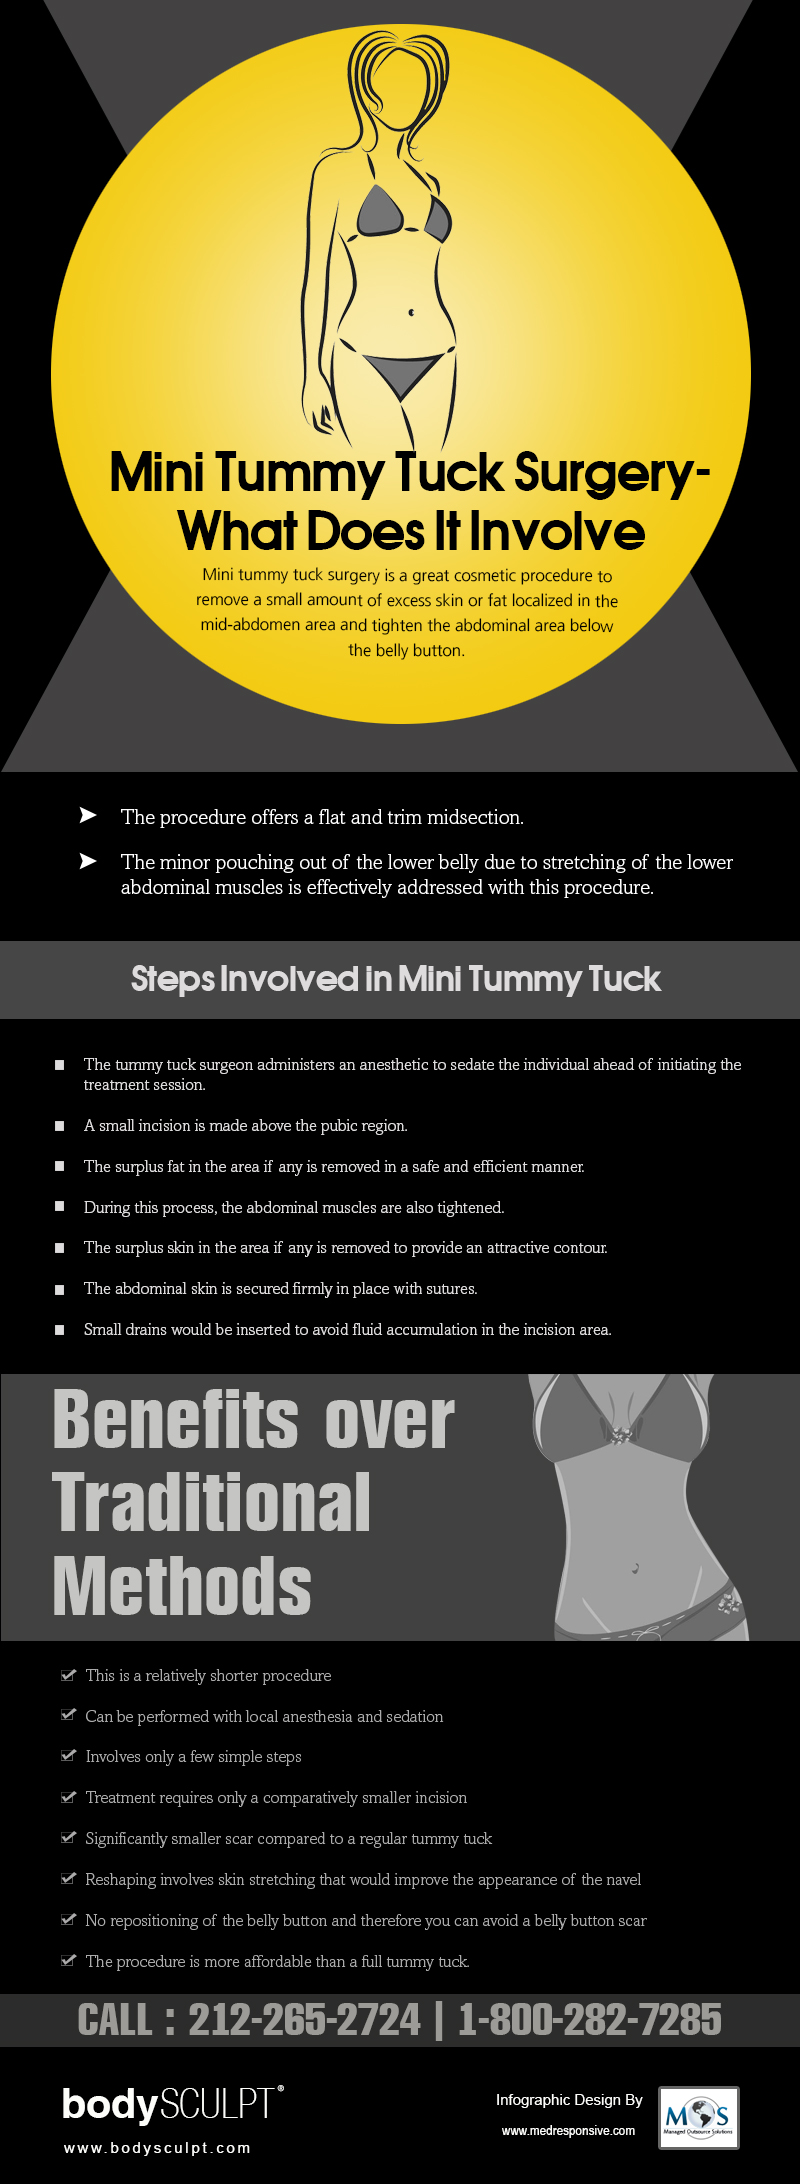 mini tummy tuck surgery - what does it involve